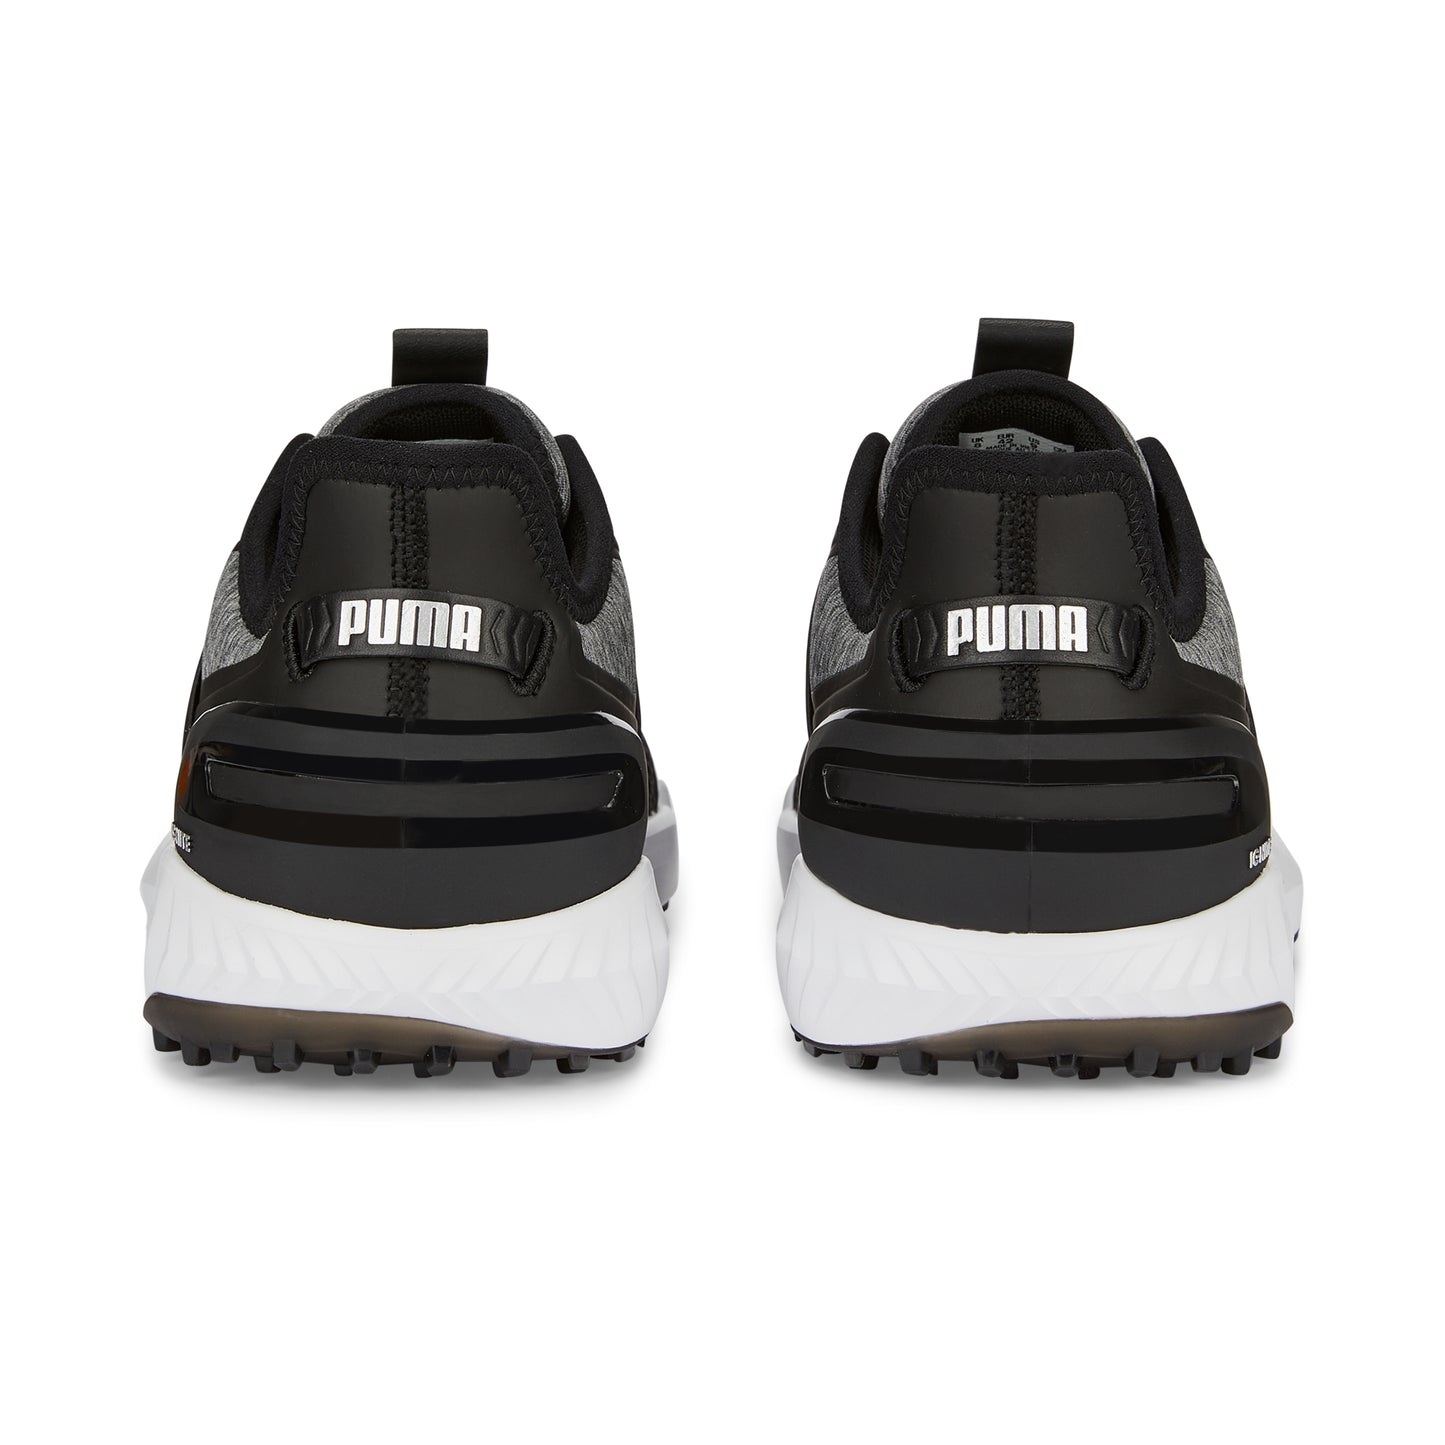 Puma Men's Ignite Elevate Wide Spikeless Golf Shoes - Black/Silver